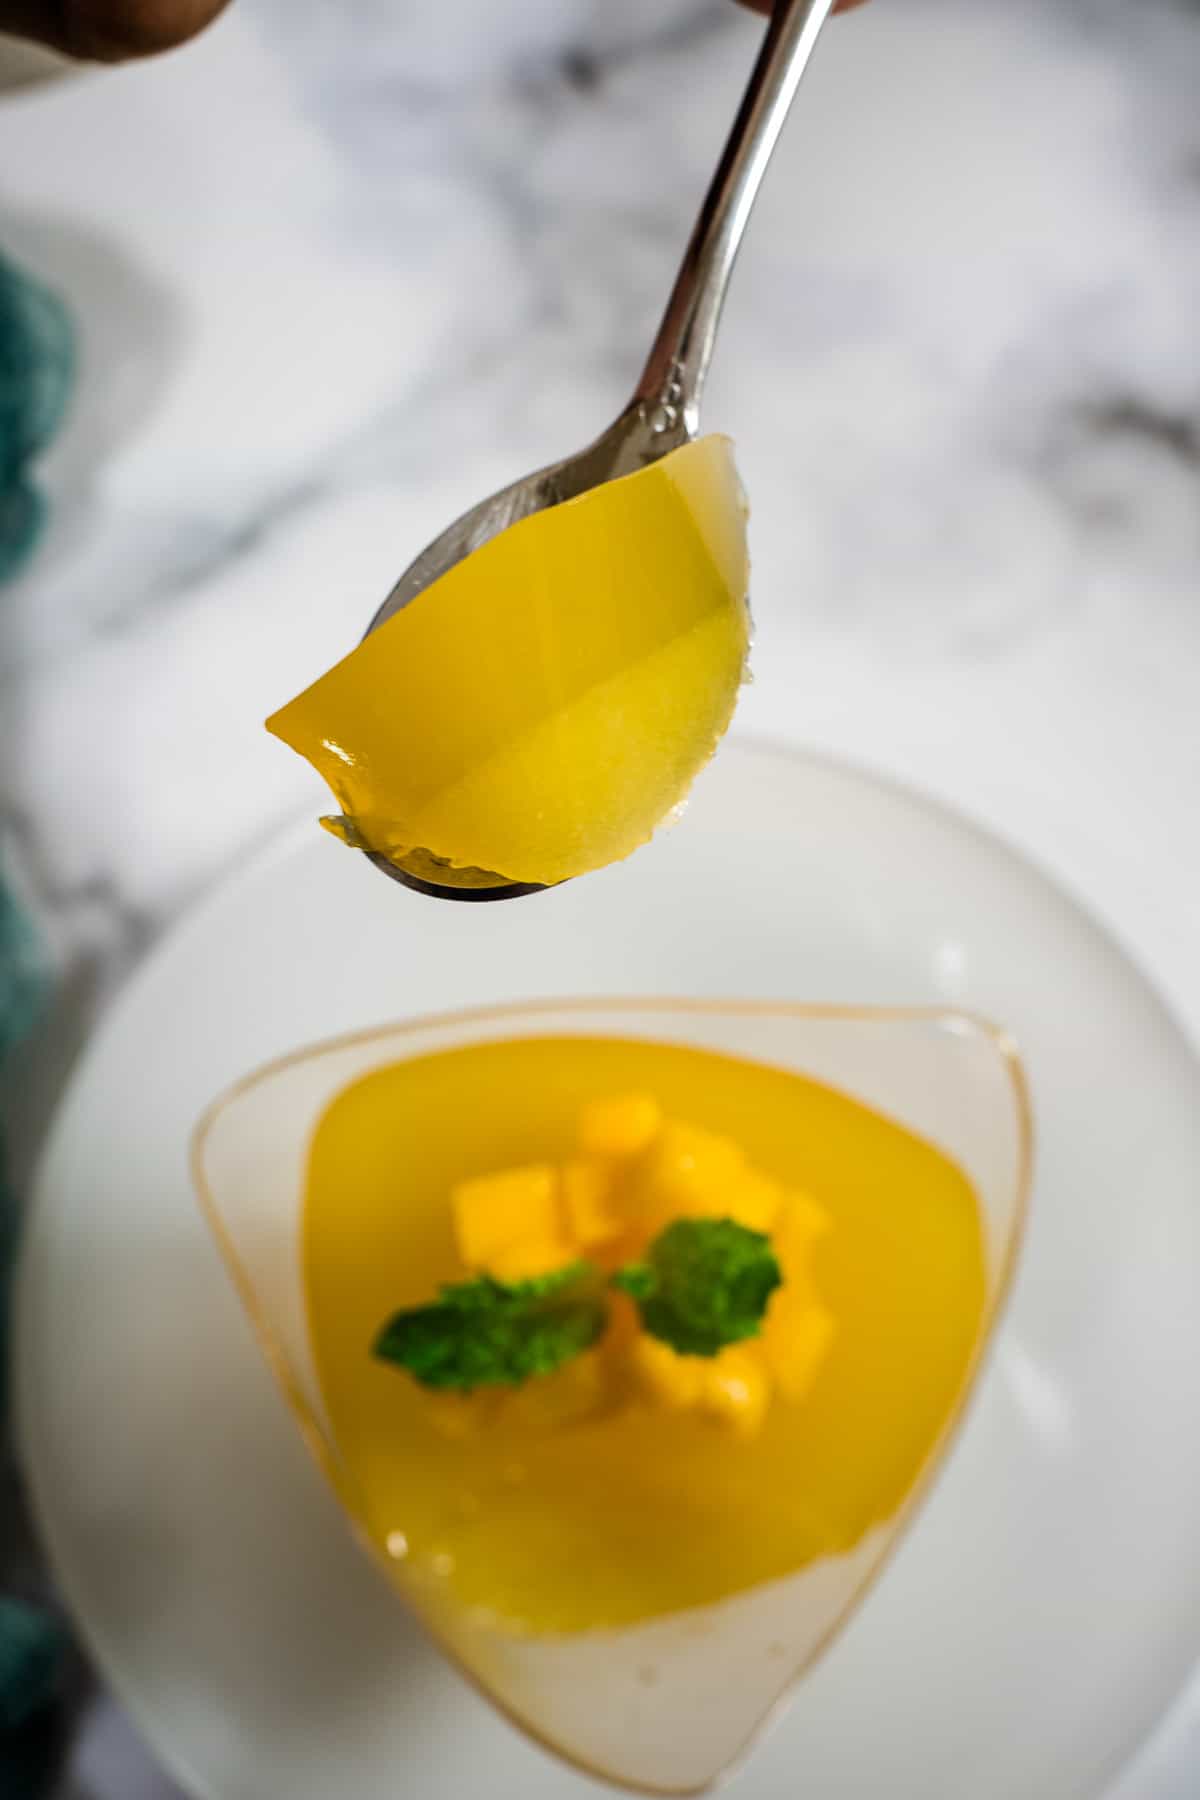 A scoop of yellow agar agar.